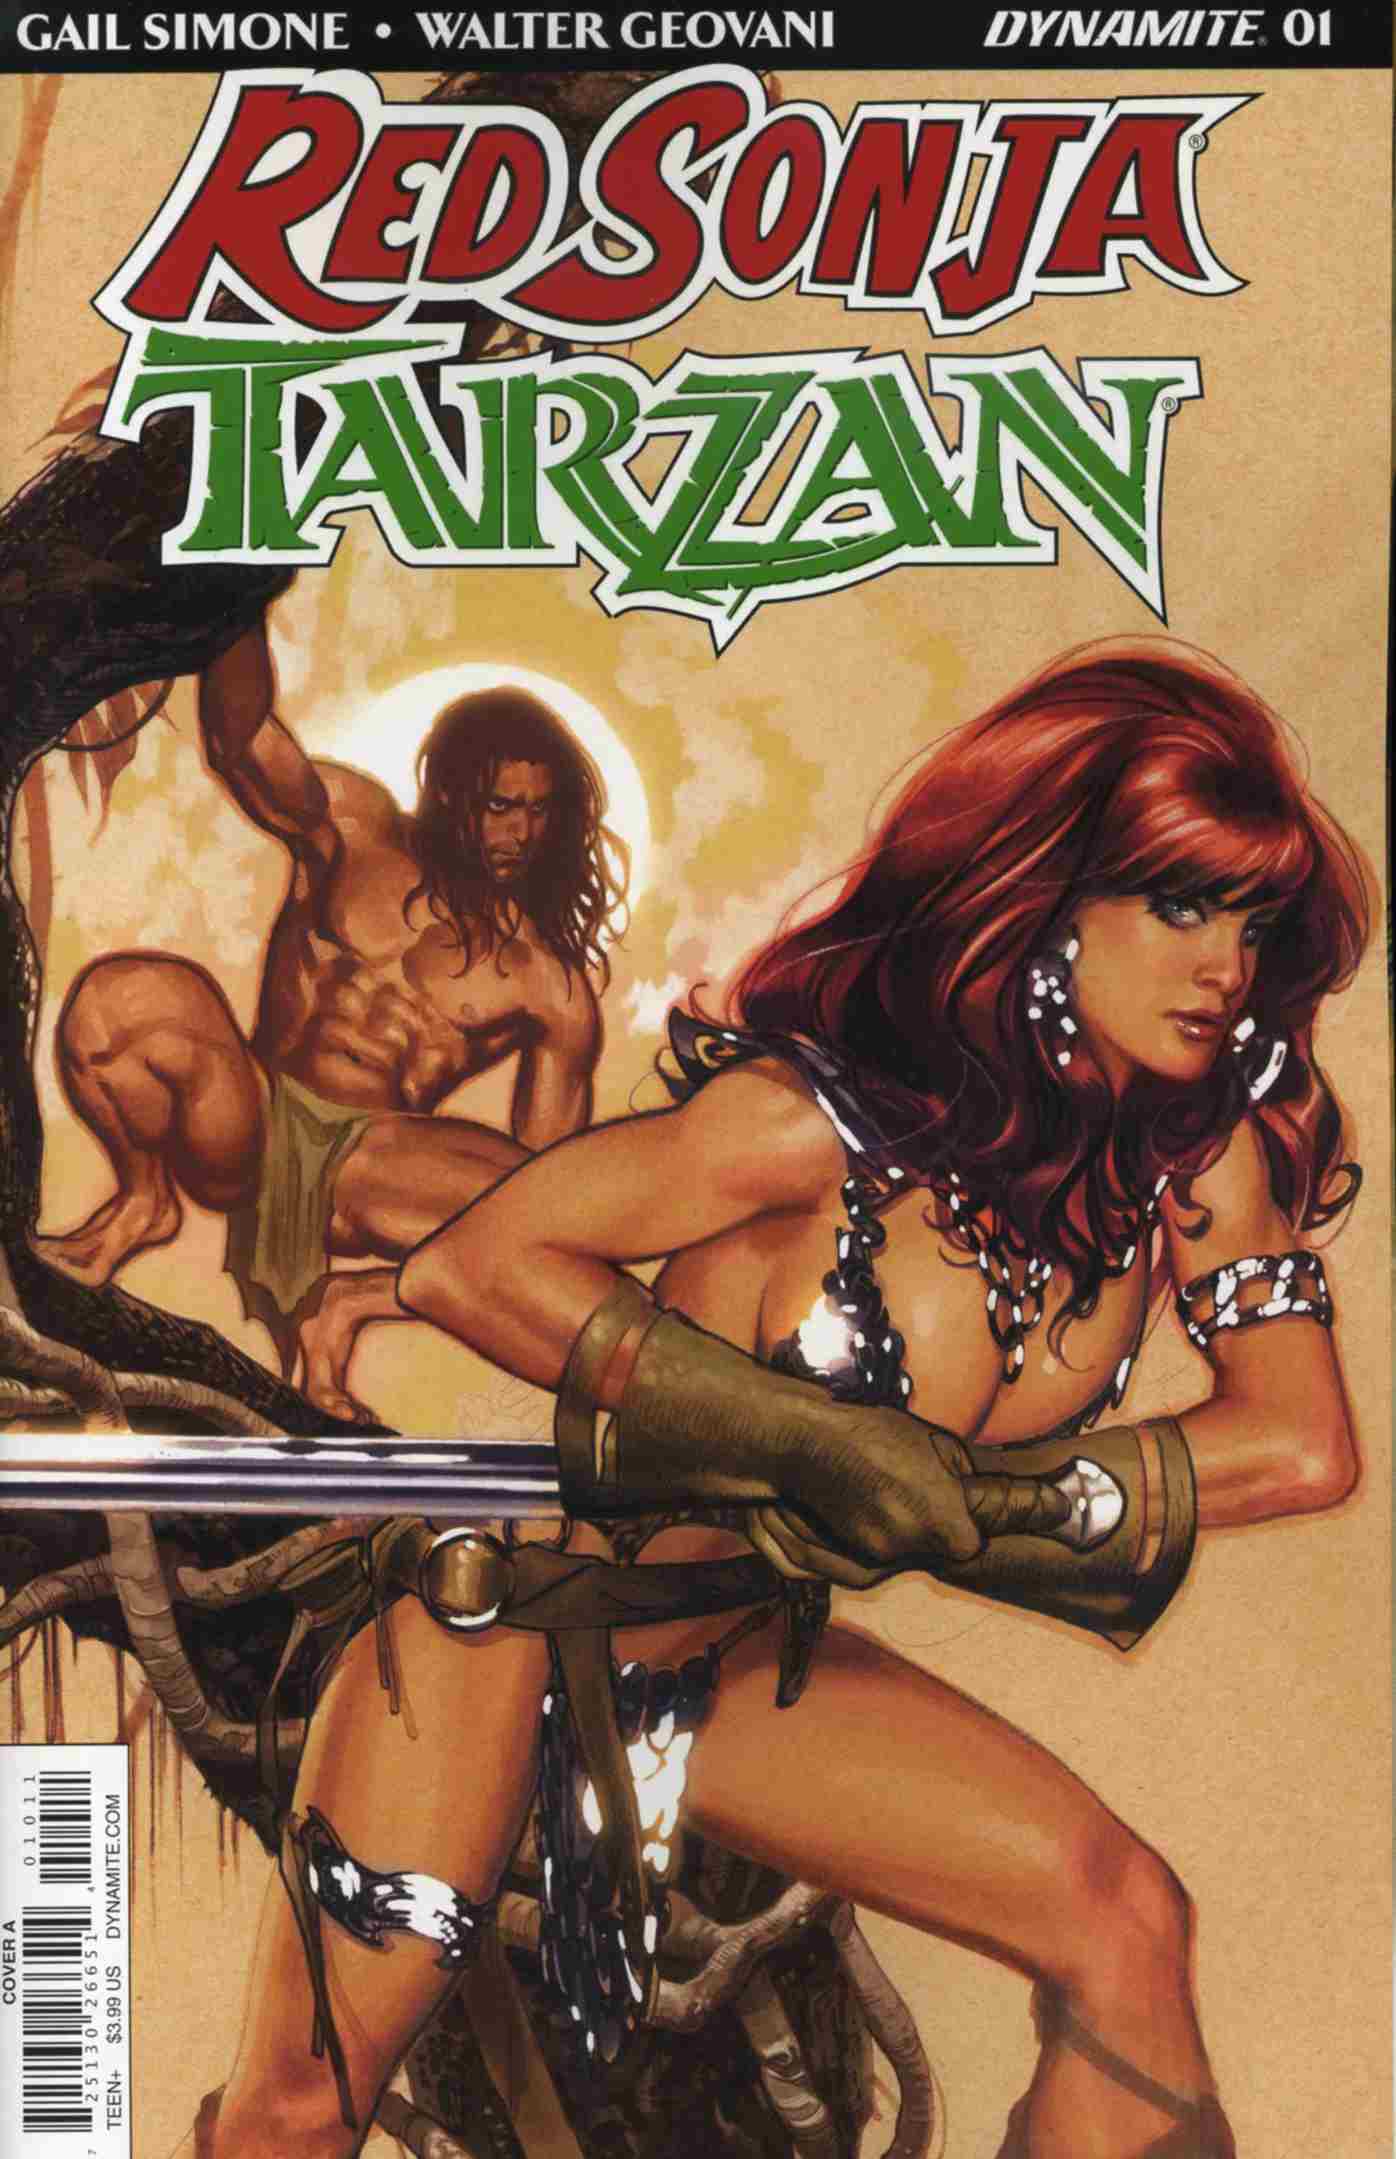 RED SONJA TARZAN A COVERS (#1- #6) -SET-